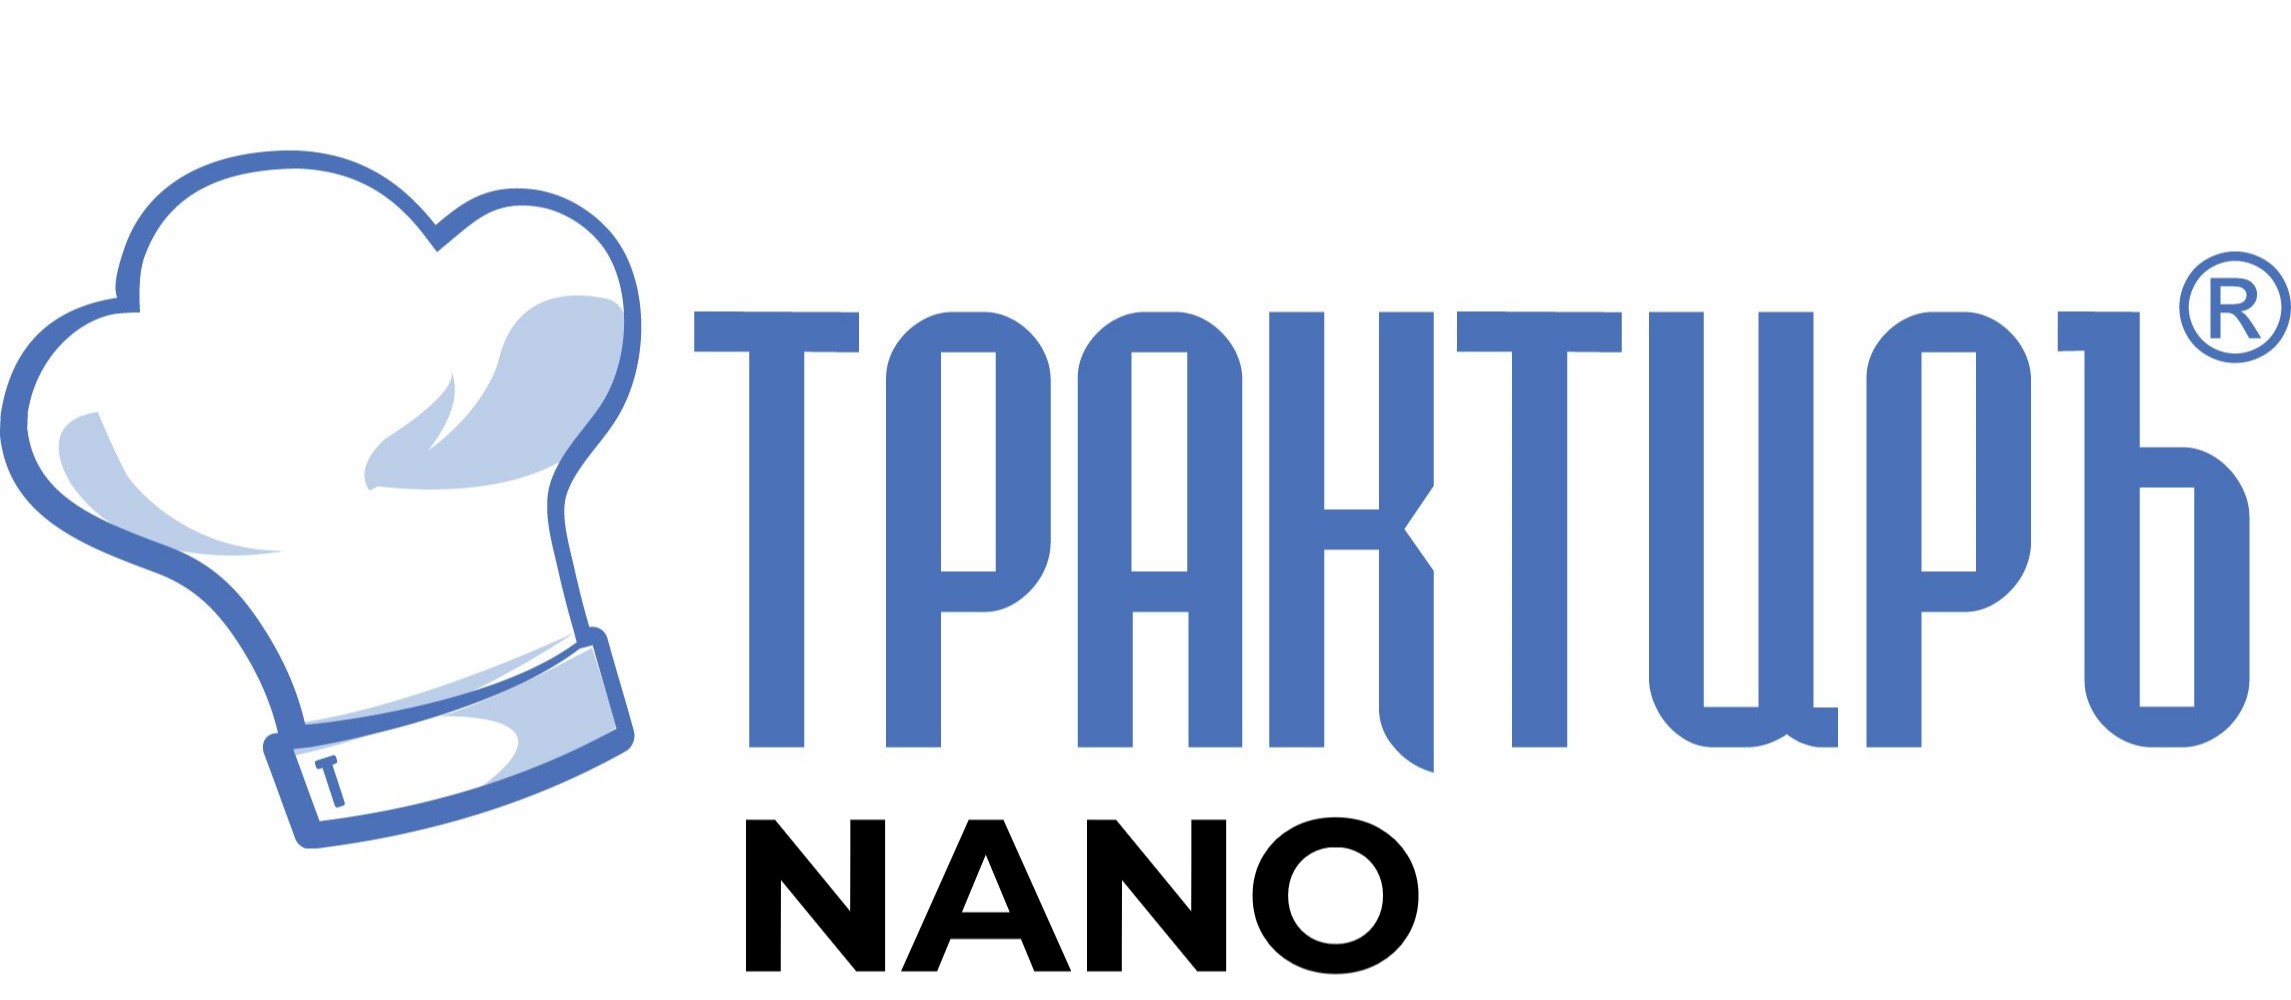 Конфигурация Трактиръ: Nano (Основная поставка) в Улан-Удэ